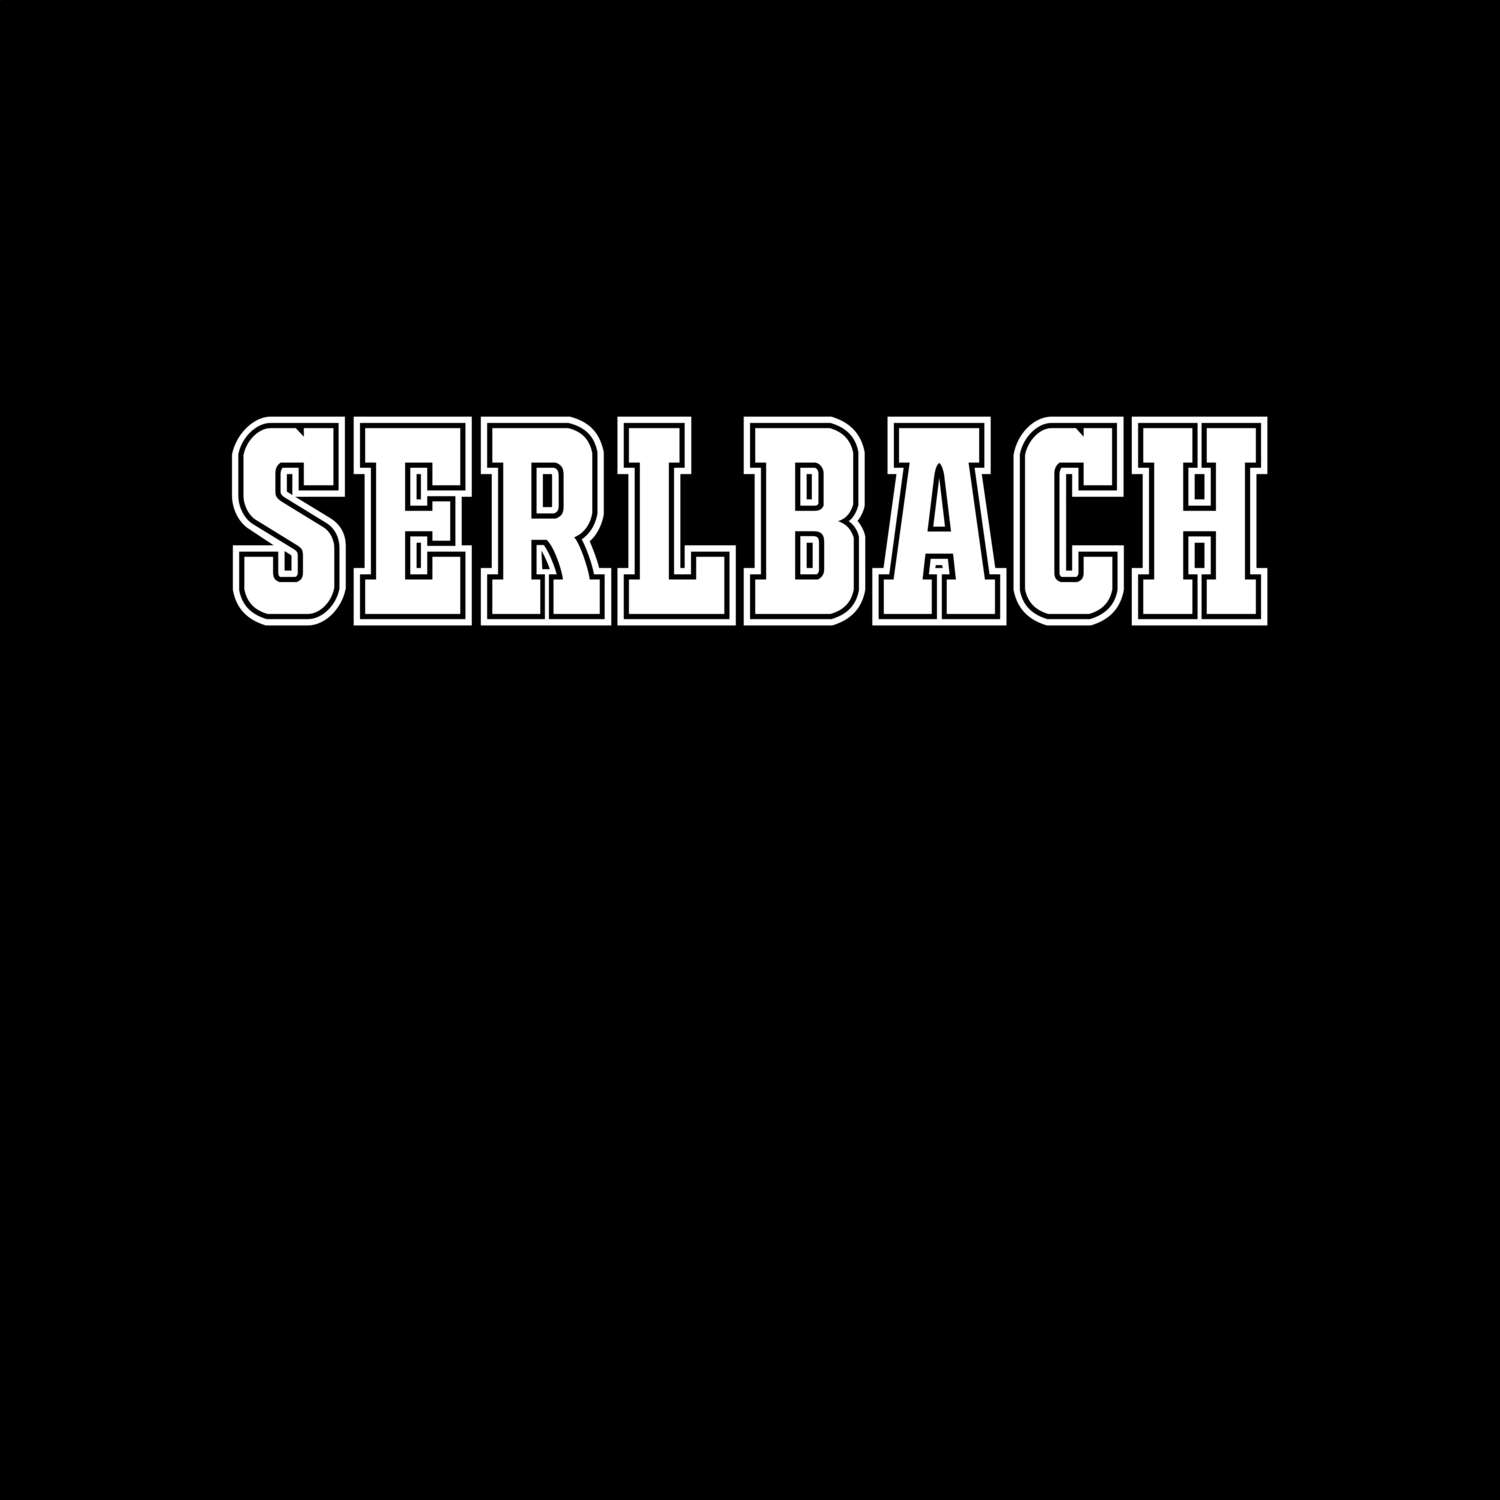 Serlbach T-Shirt »Classic«